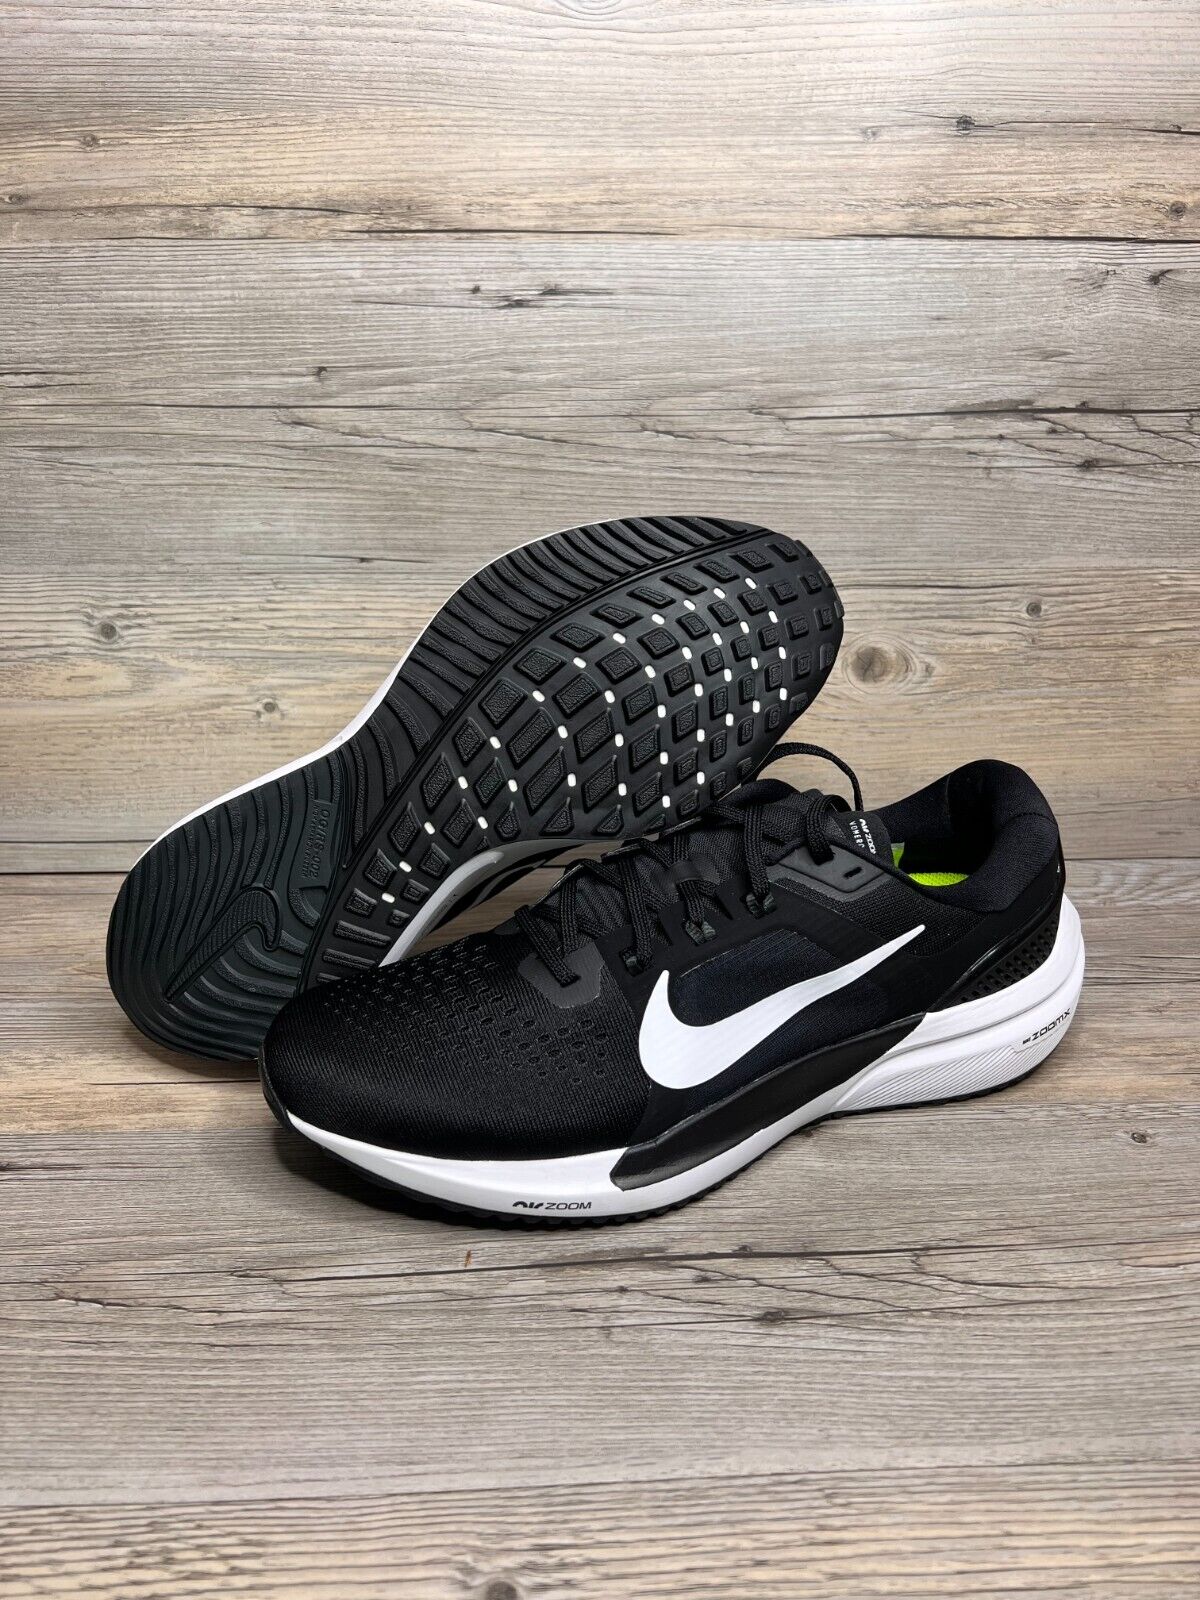 Nike Air Zoom Vomero 15 Mens Size 12 Black White CU1855 001 | eBay